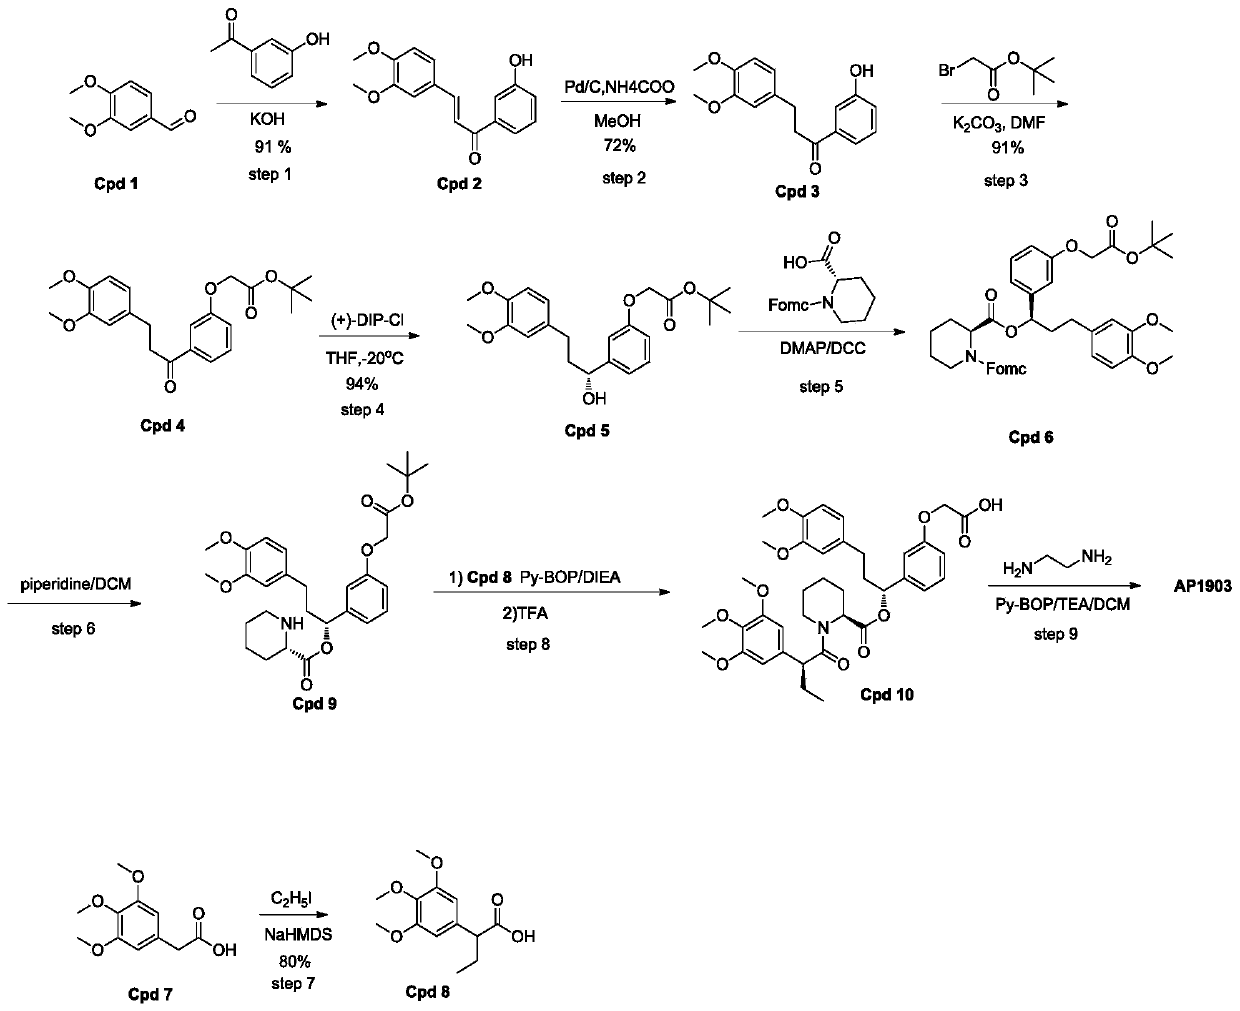 A homodimer synthesis process of fkbp ligand